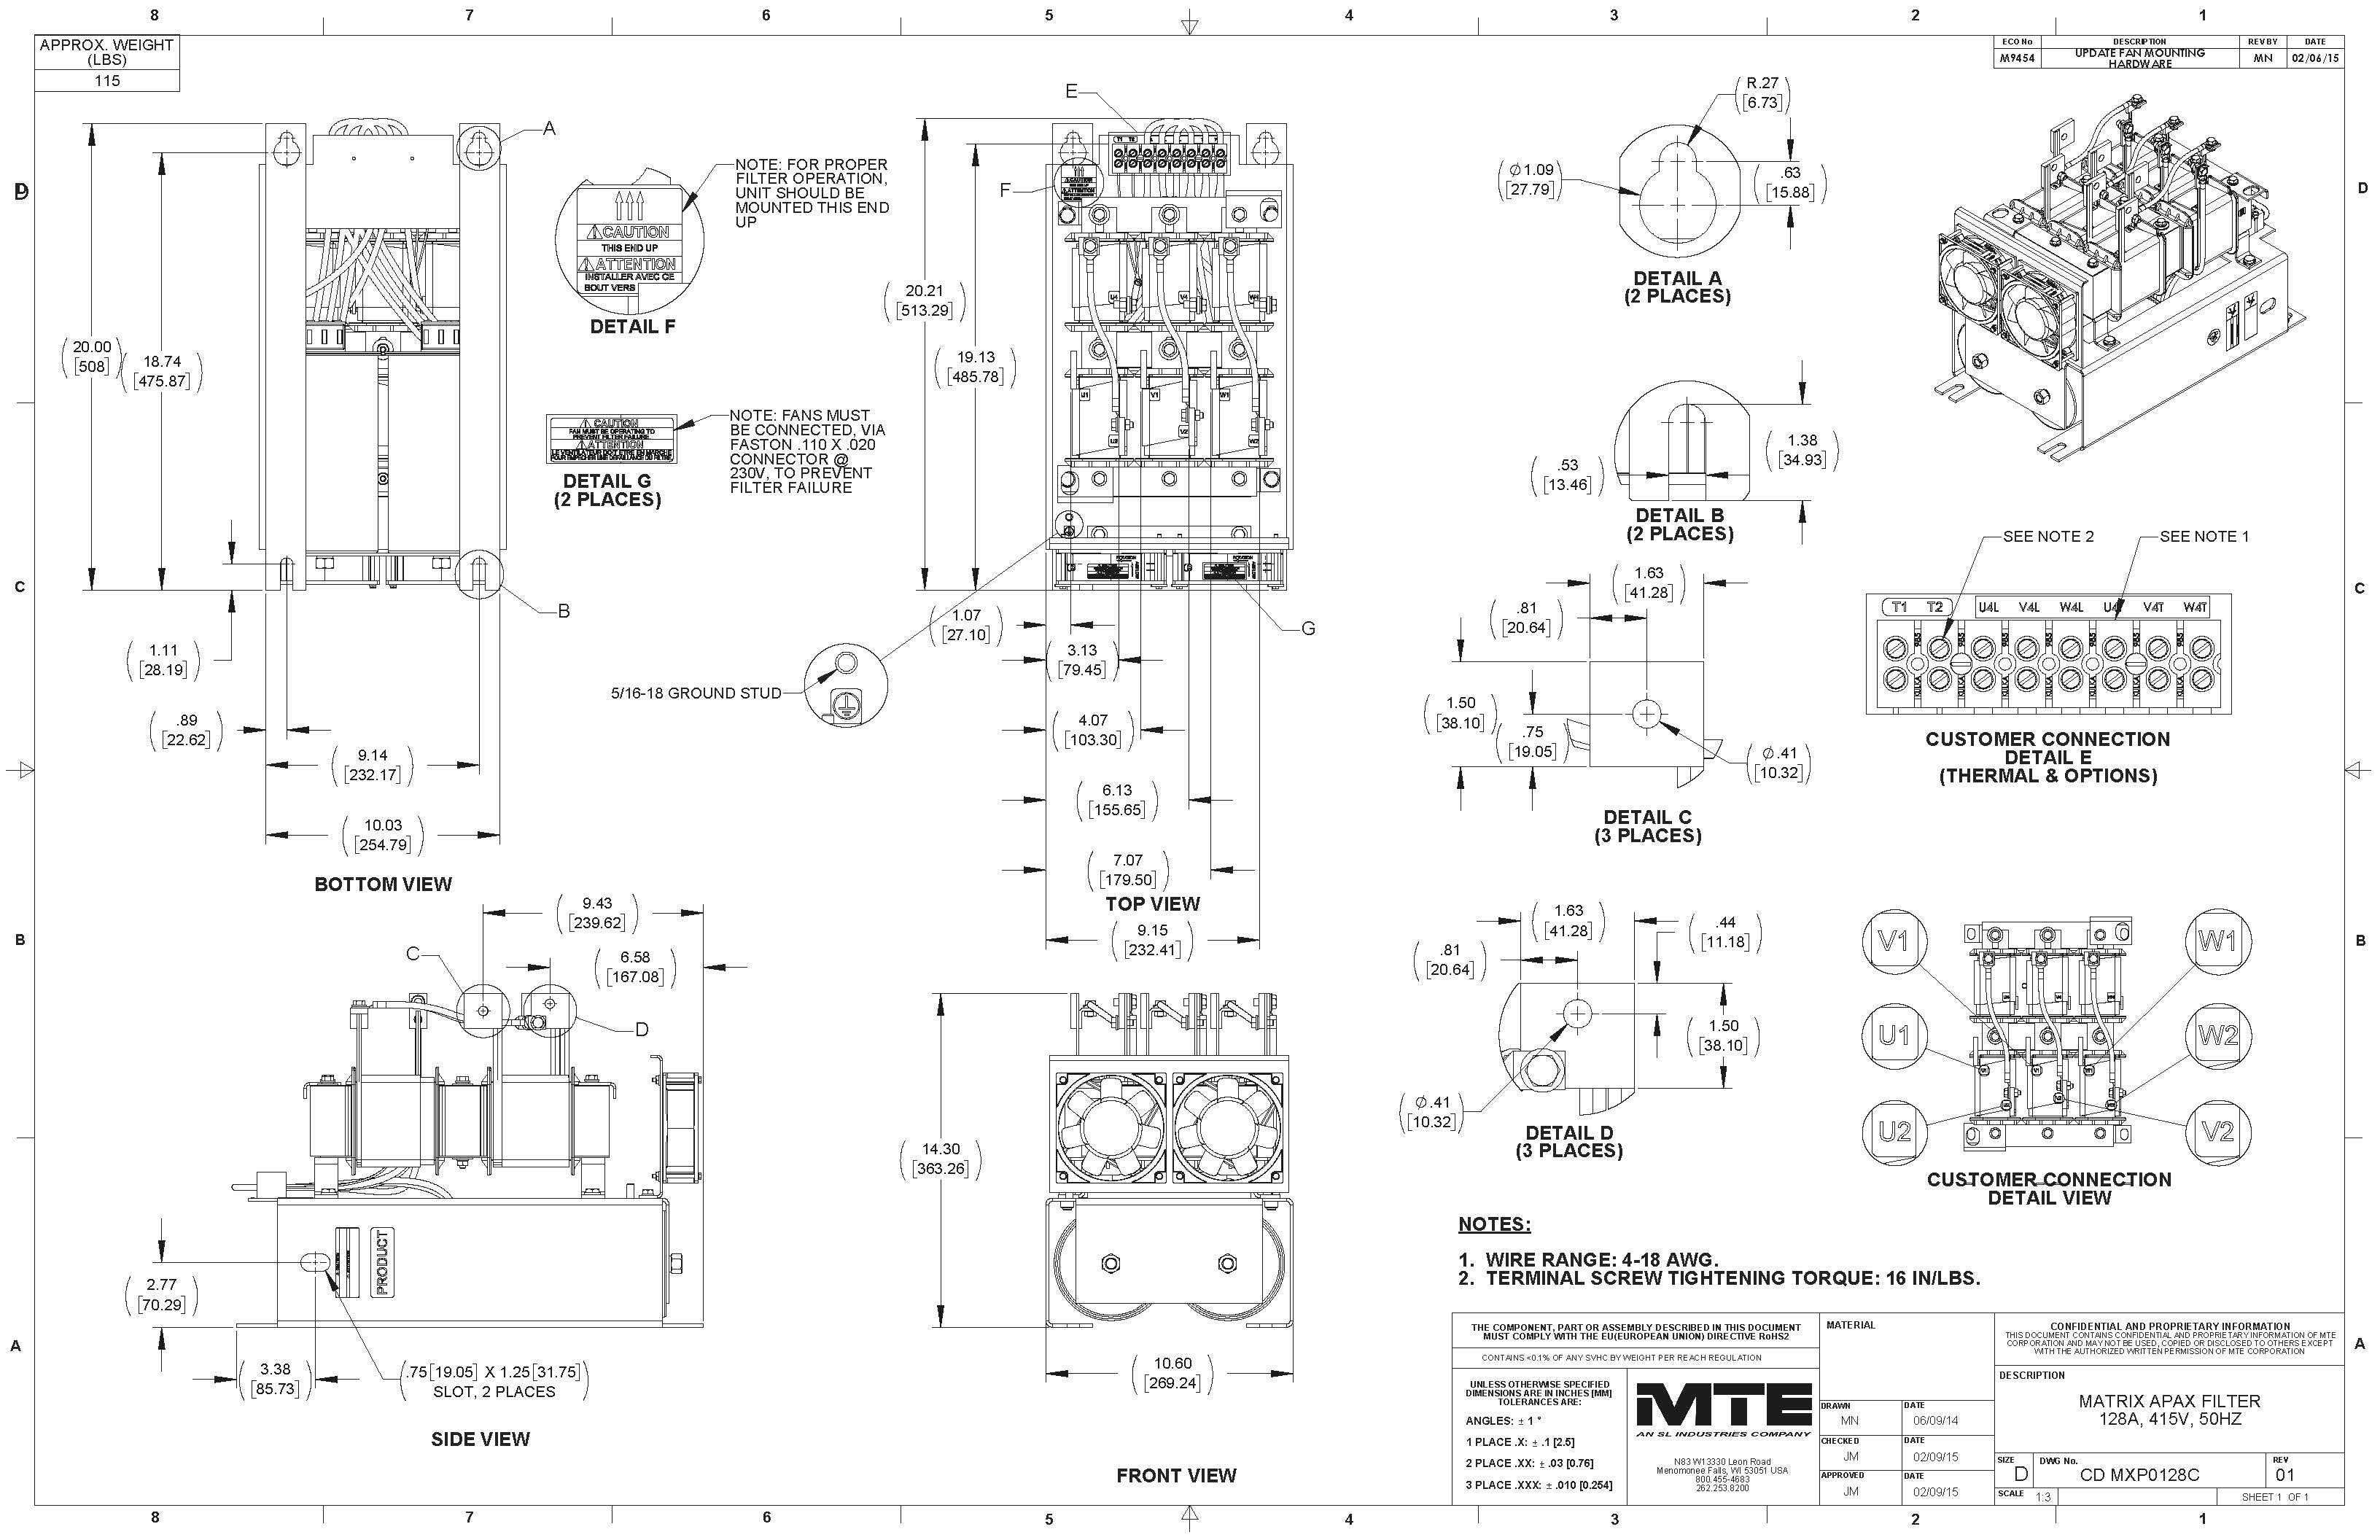 MTE 矩阵滤波器 MXP0128C 的图像